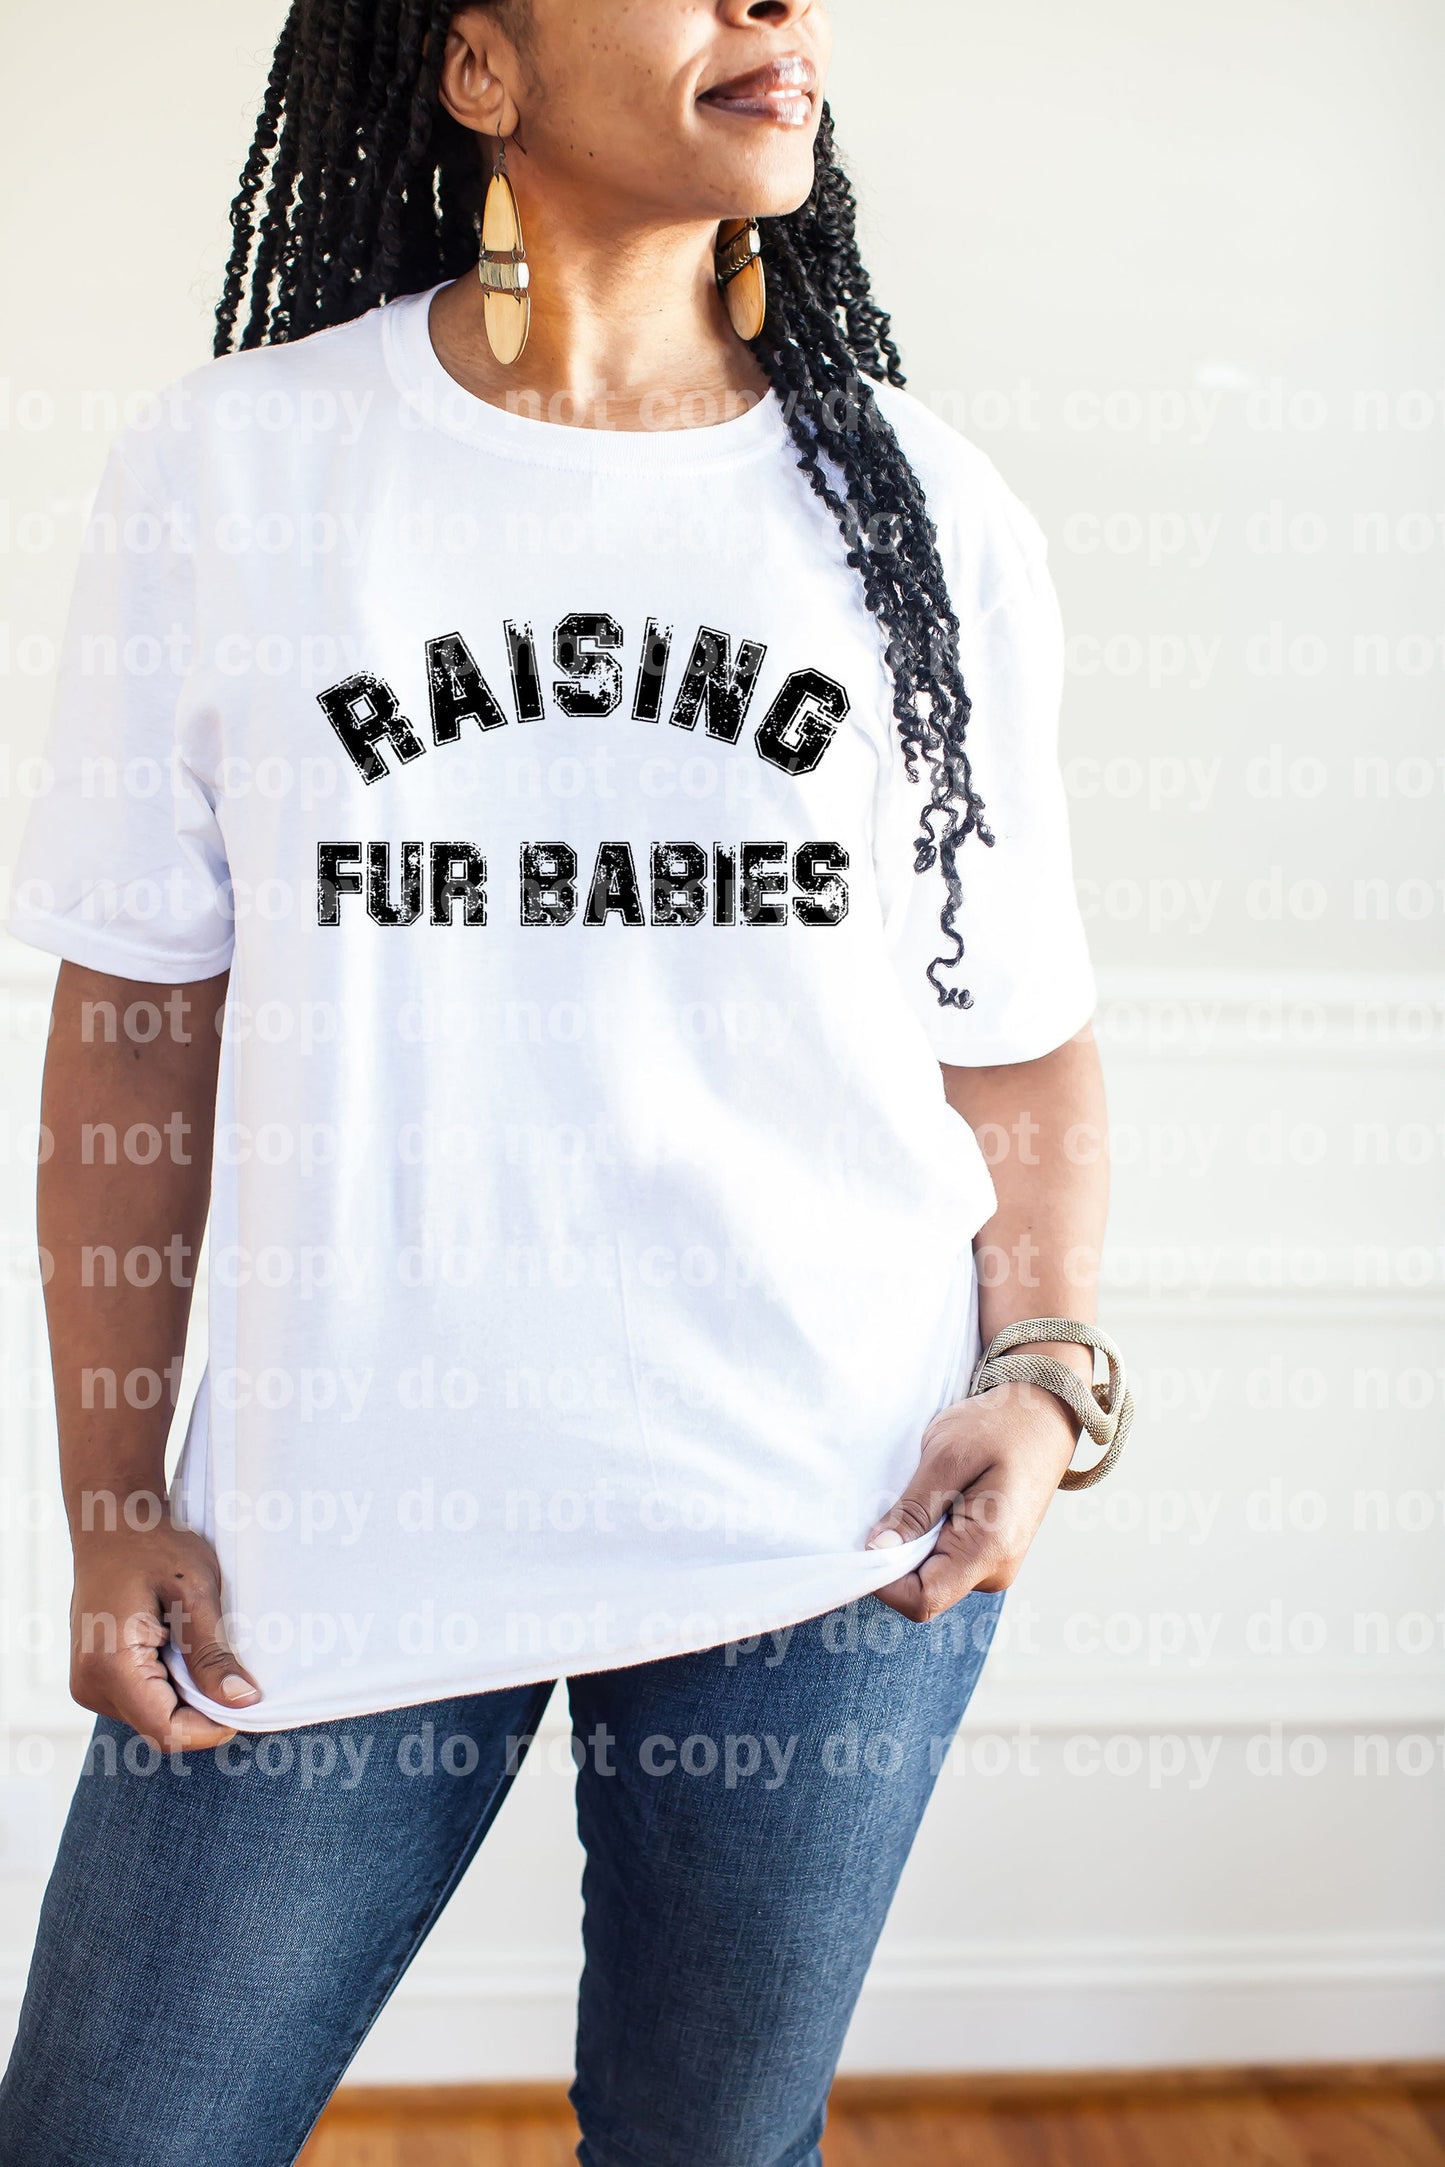 Raising Fur Babies Distressed Black/White Dream Print or Sublimation Print